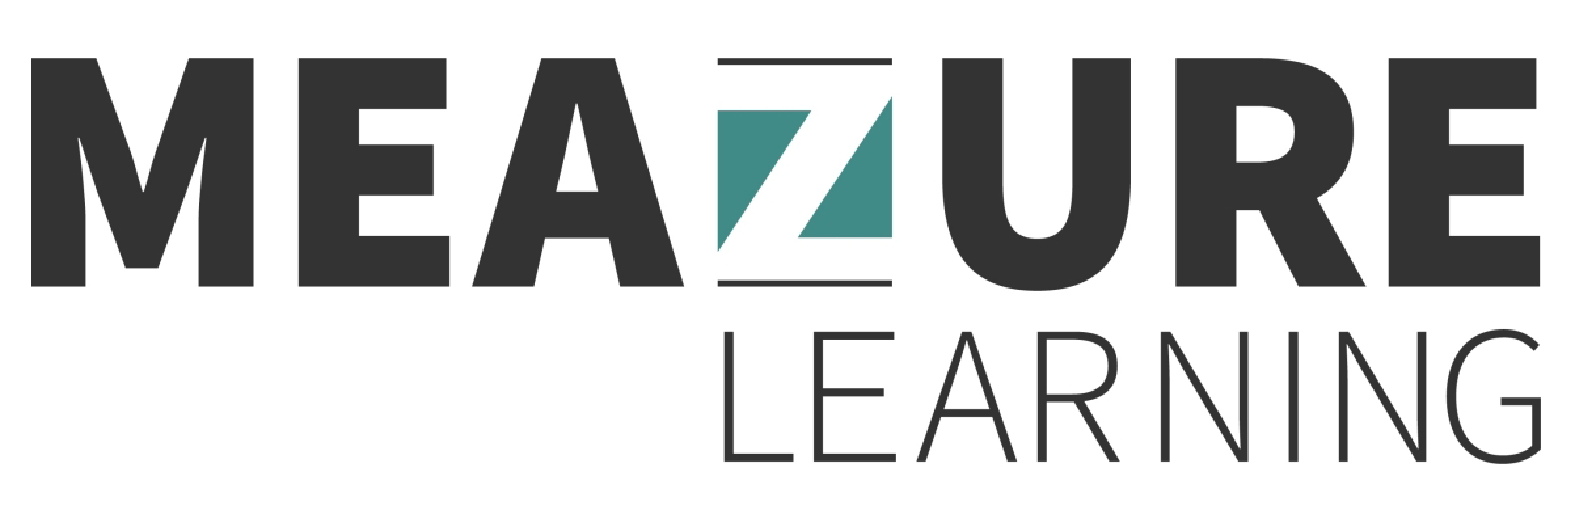 Meazure Learning Partner logos-01-1